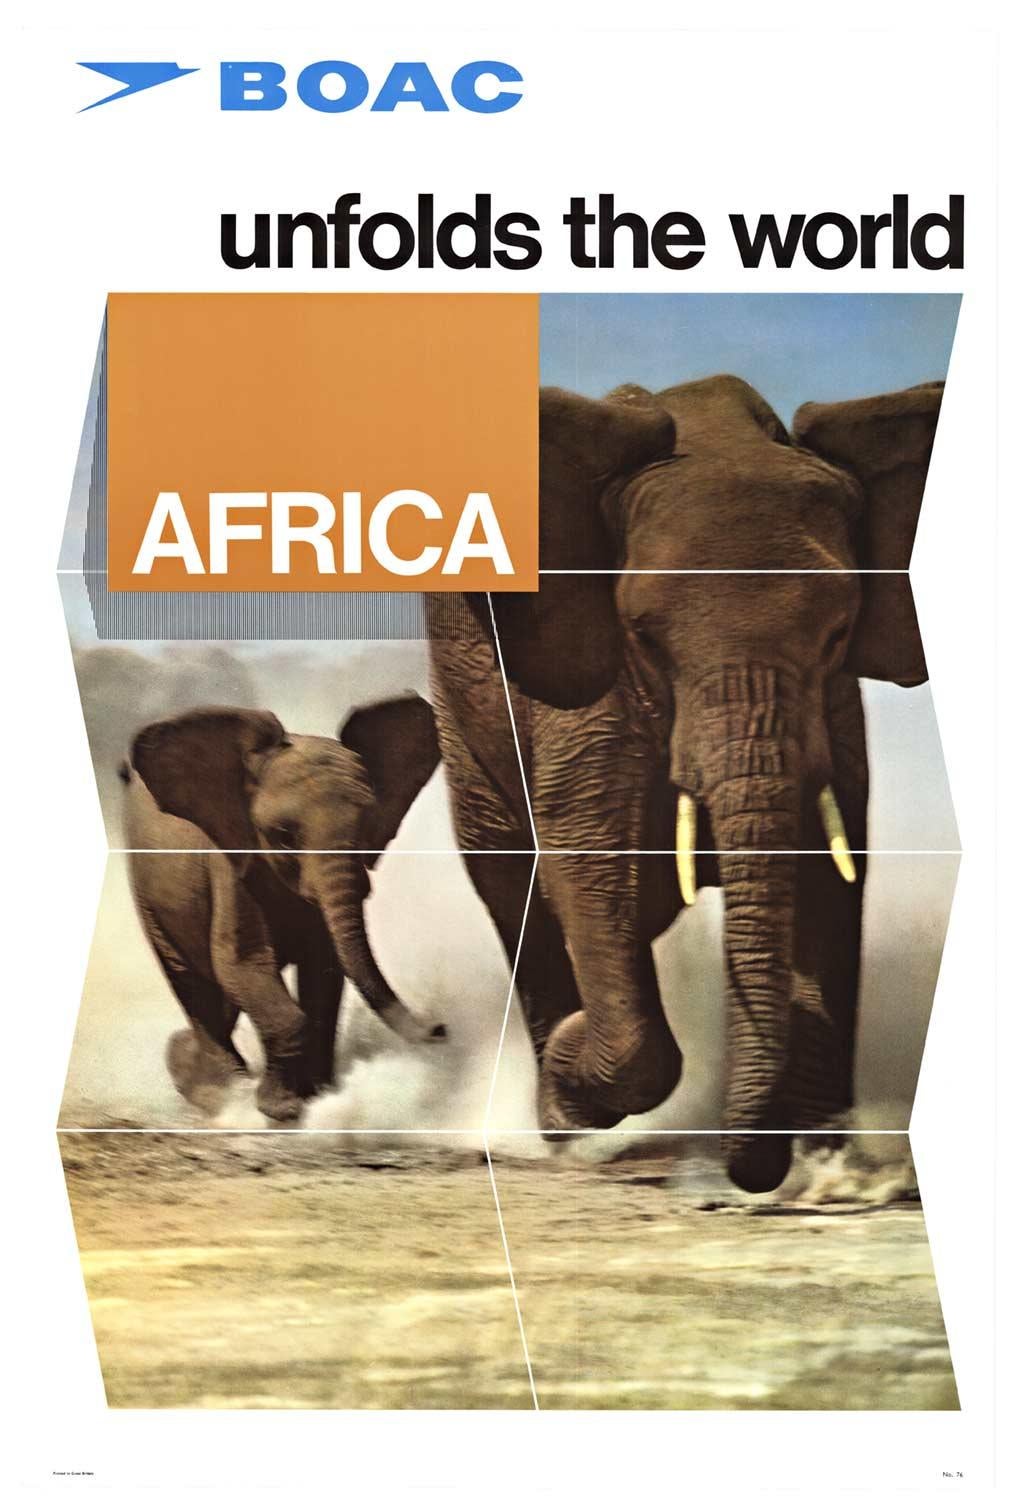 Affiche de voyage vintage originale BOAC Africa « unfolds the world »